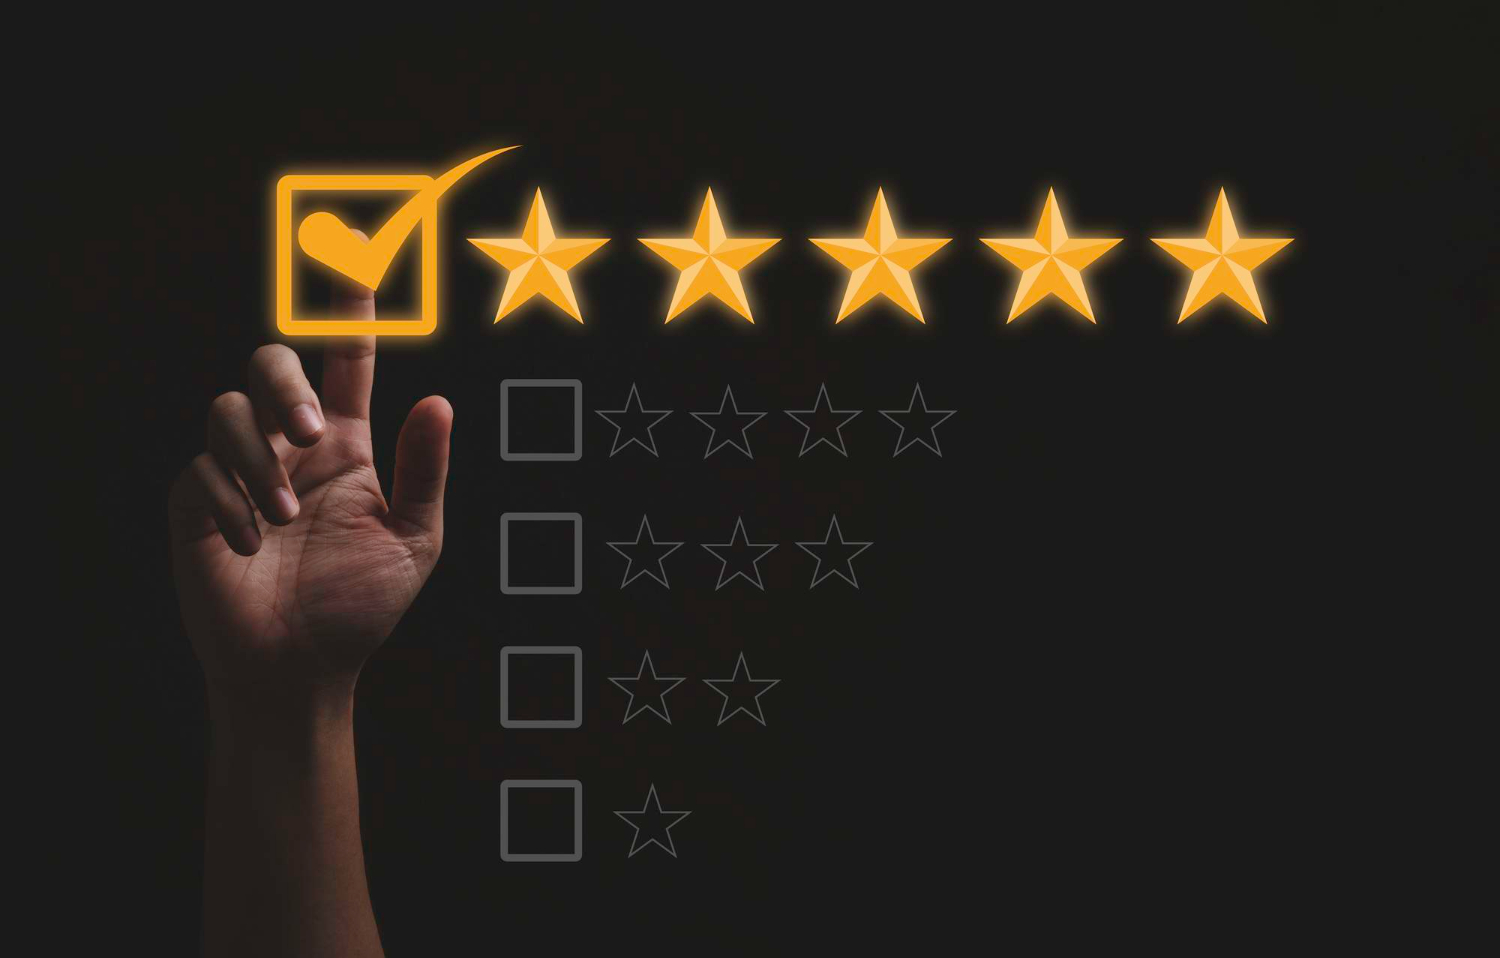 A-five-star-golden-rating-for-evaluation